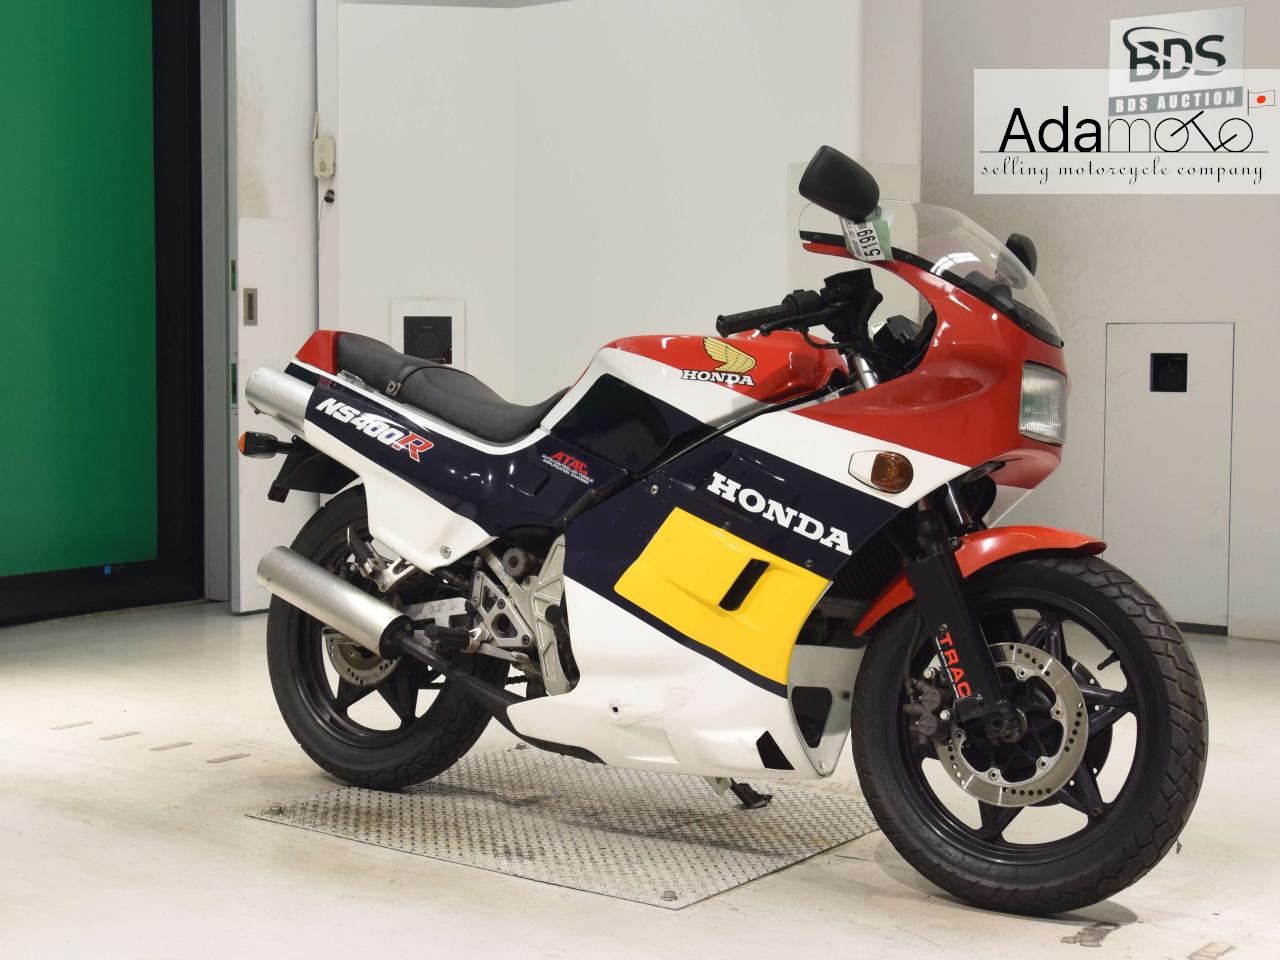 Honda NS250R - Adamoto - Motorcycles from Japan